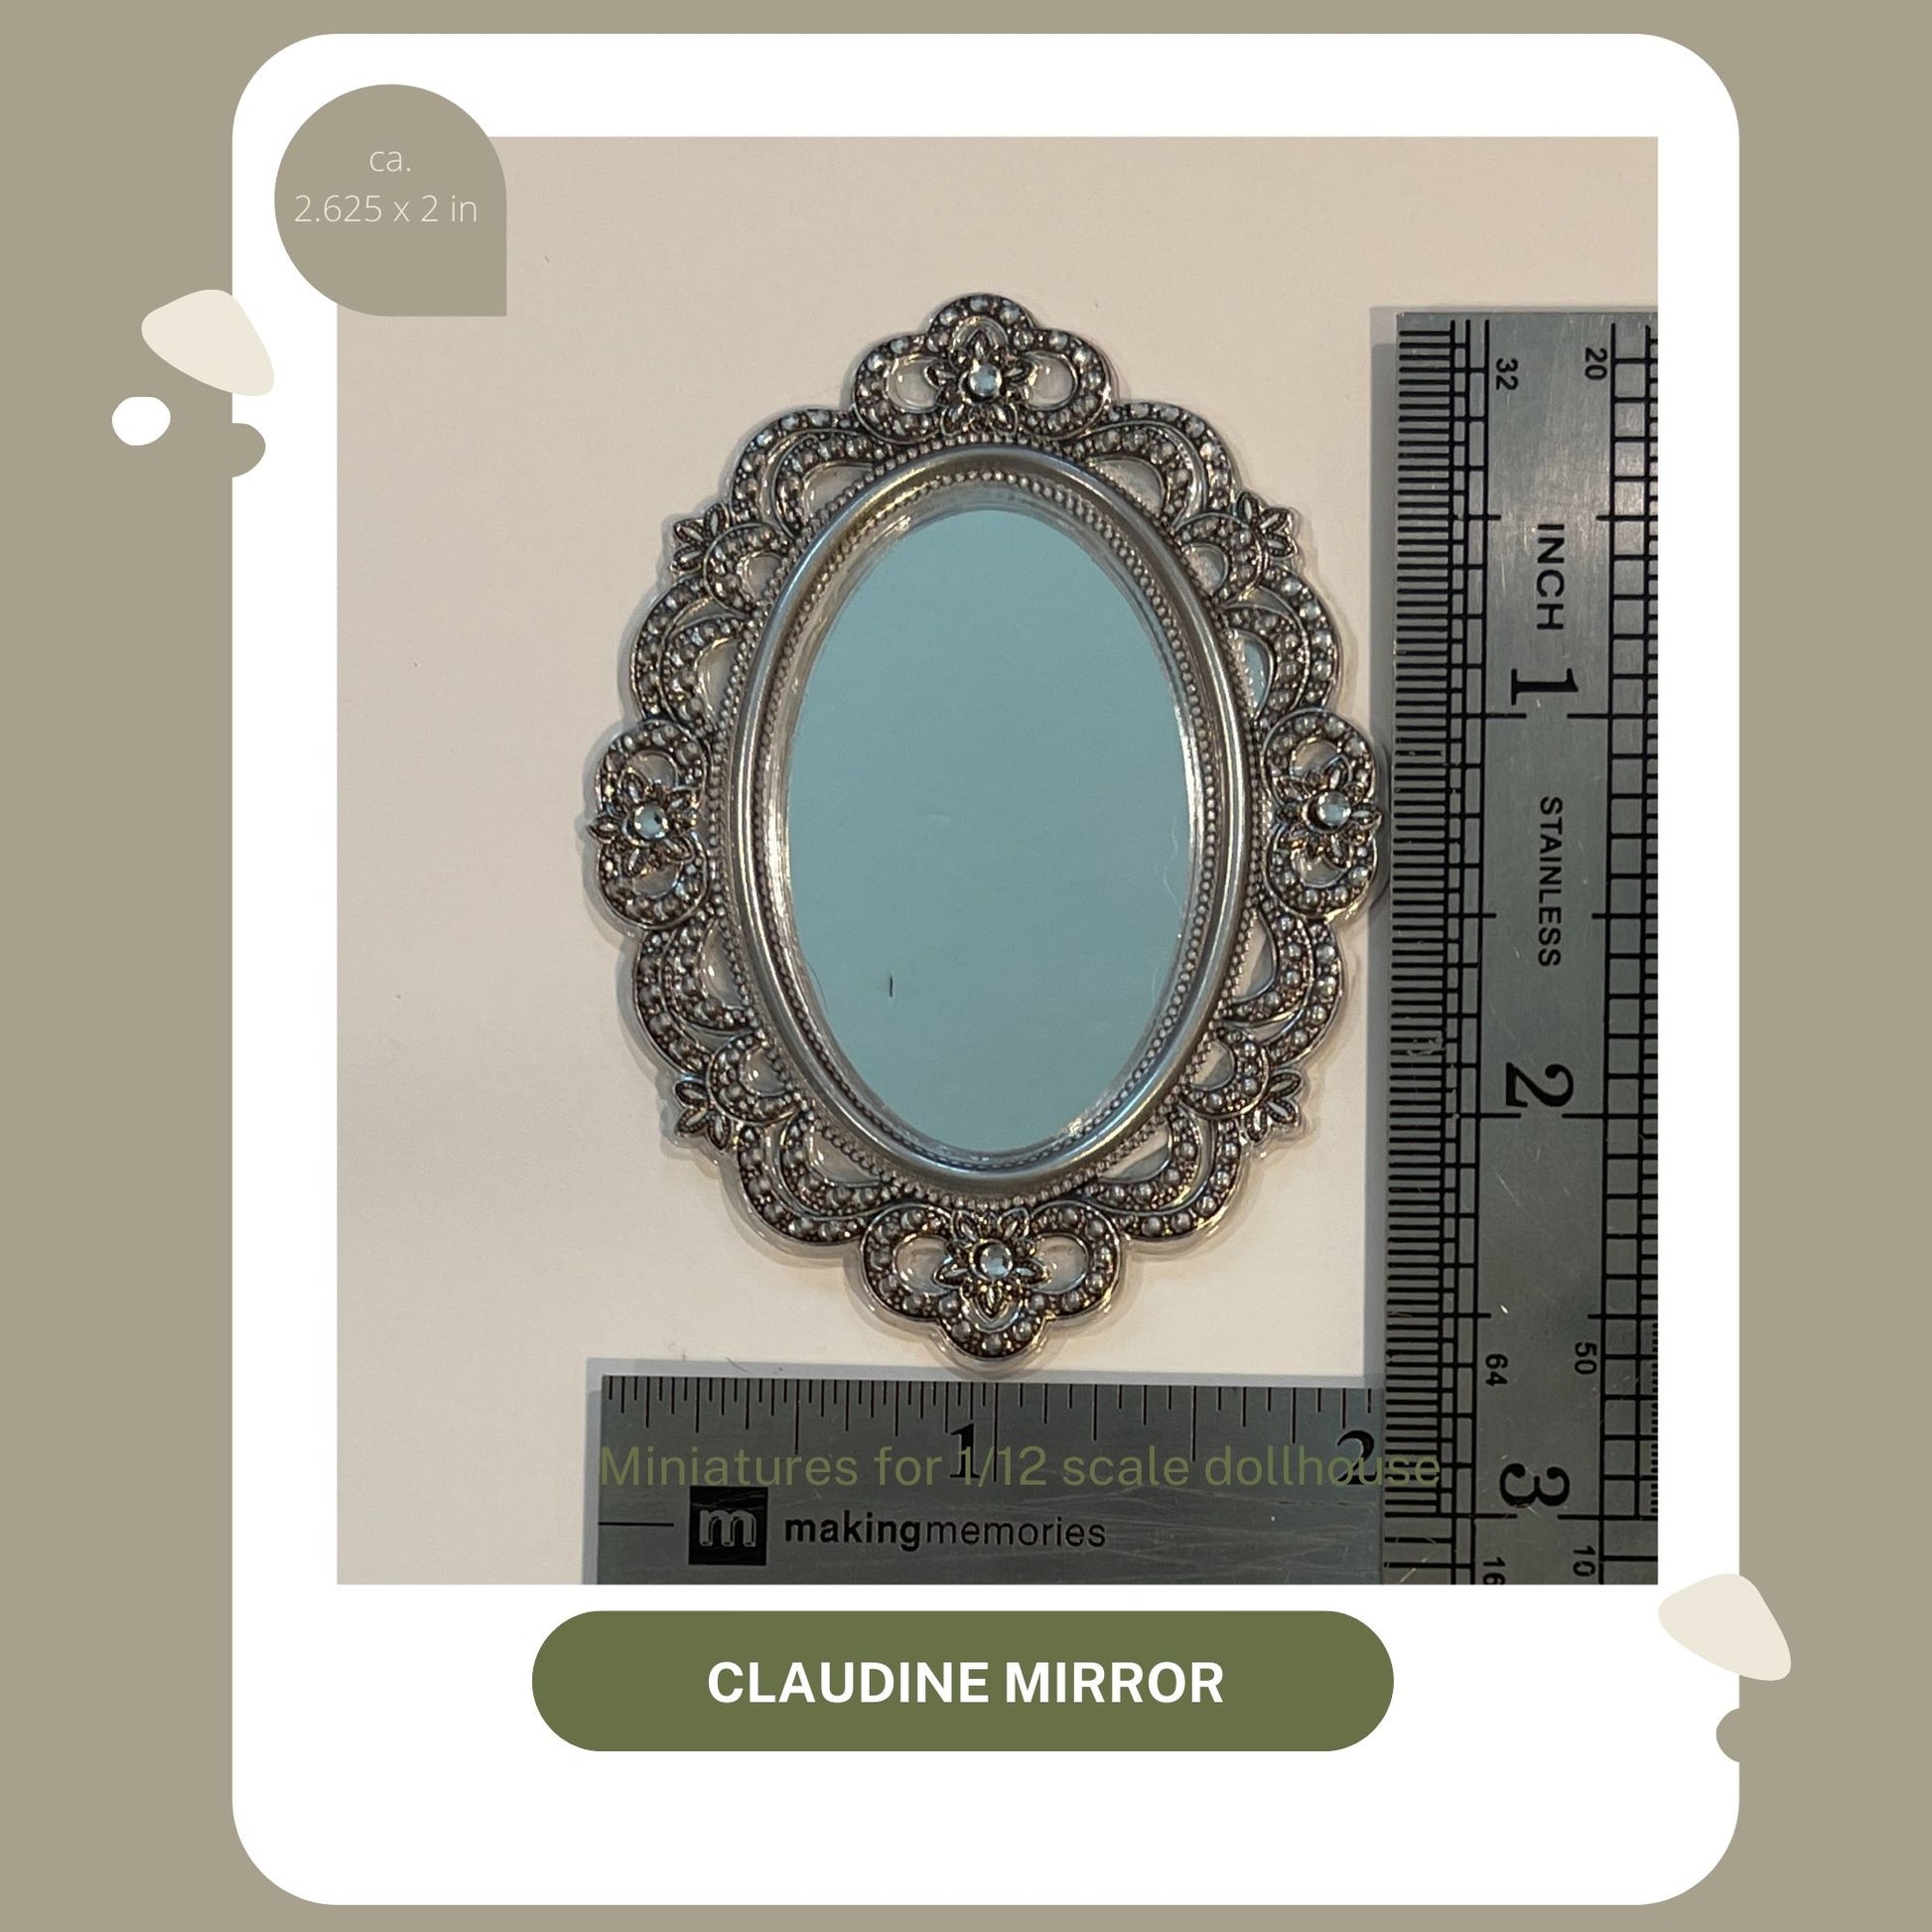 Claudine Mirror 1/12 scale dollhouse accessories